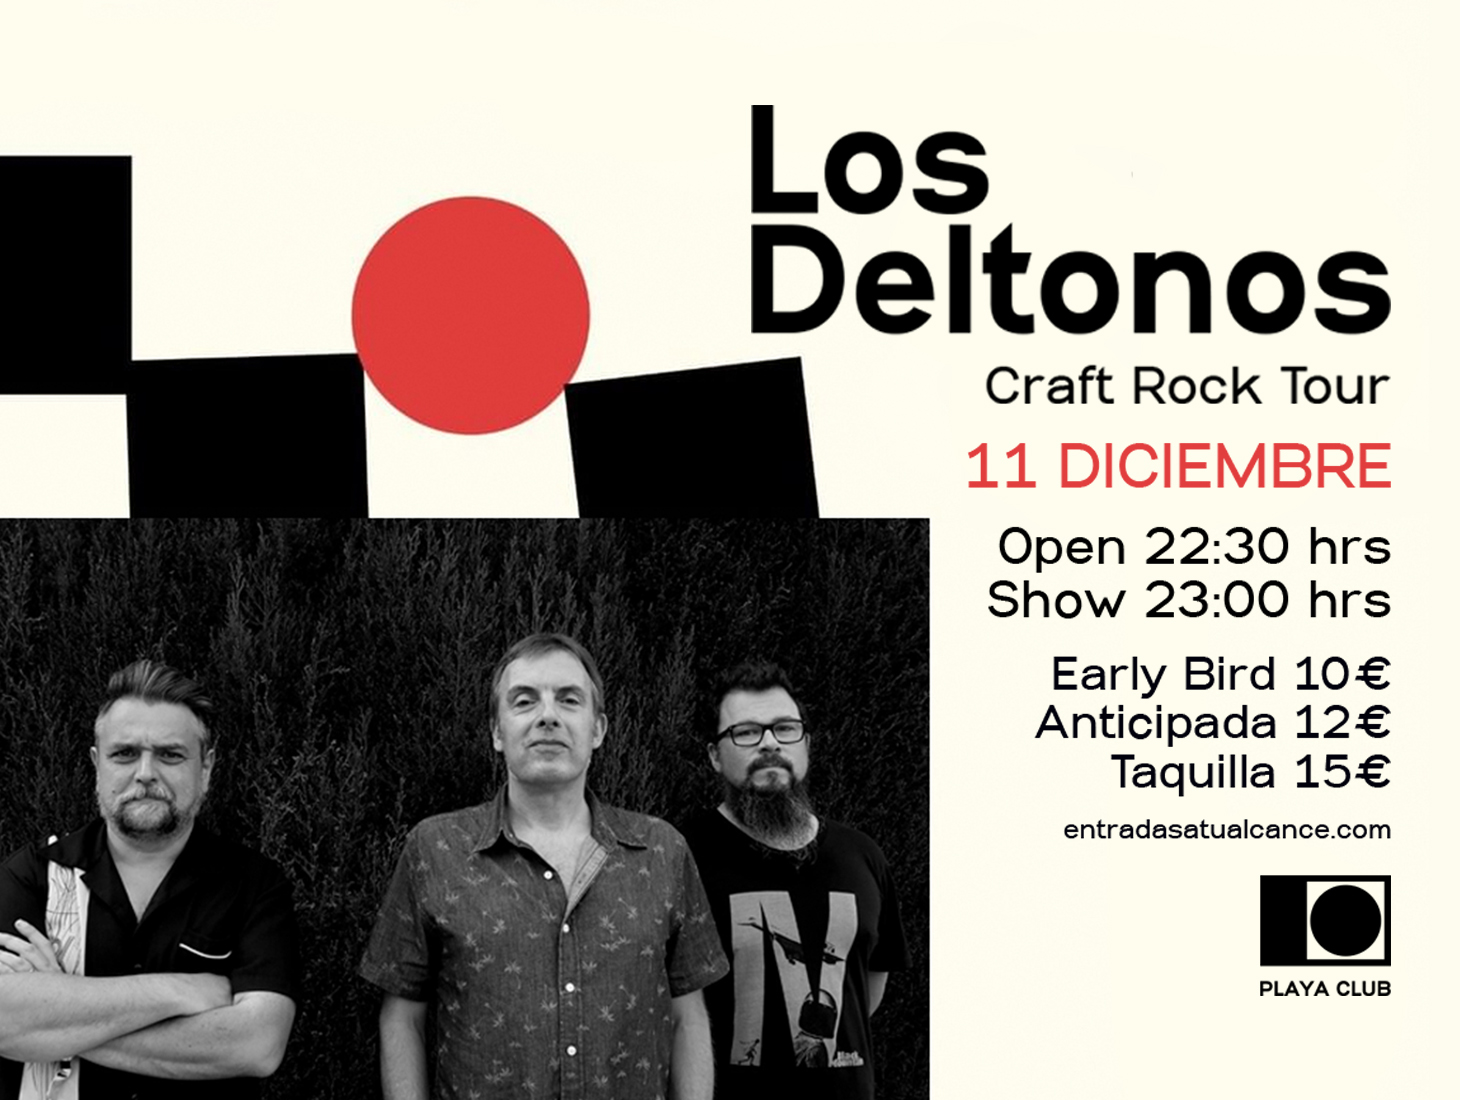 los-deltonos-craft-rock-tour-618e23bb49f895.27622207.jpeg